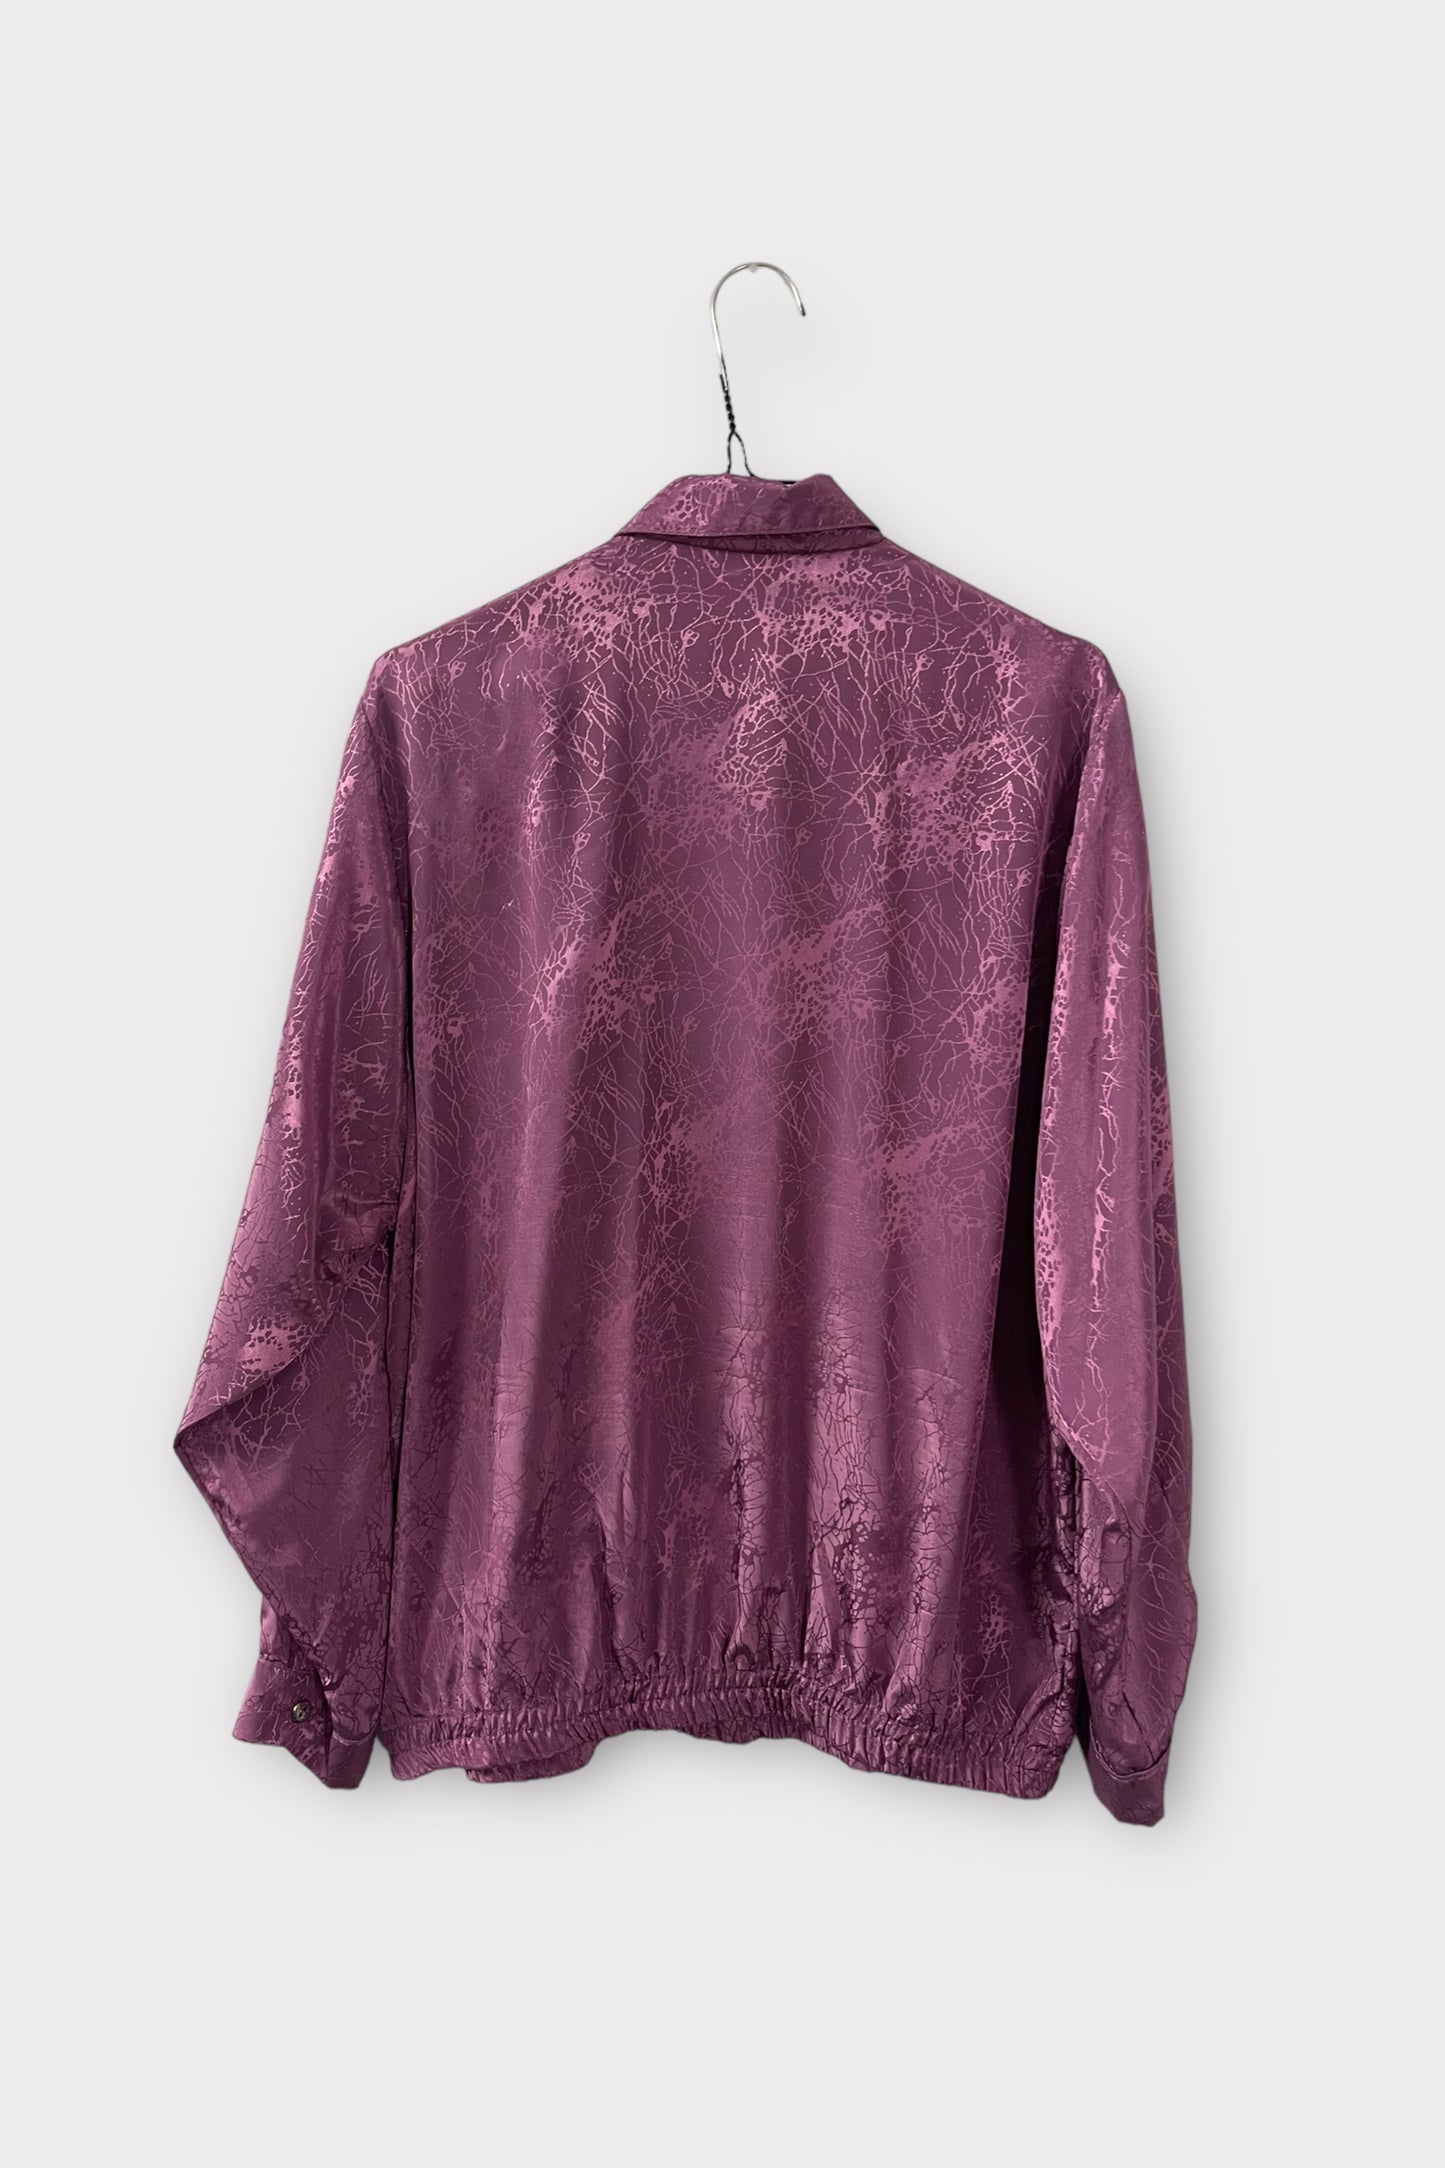 kingsley damast blouse - M